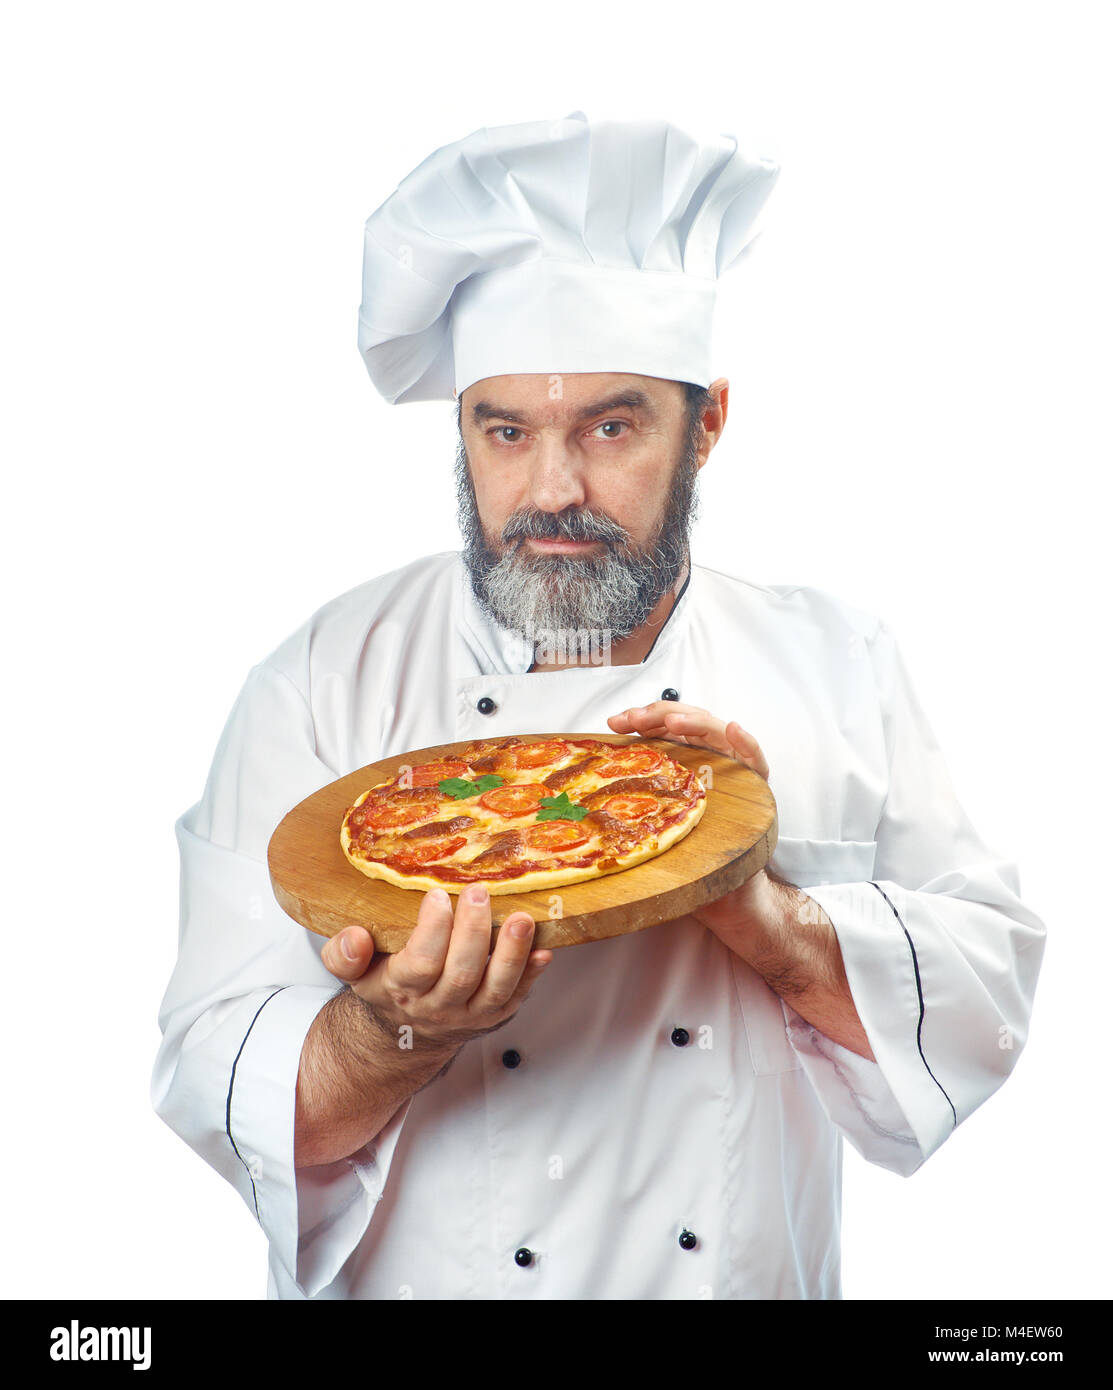 chief cook holding pizza napoletana Stock Photo